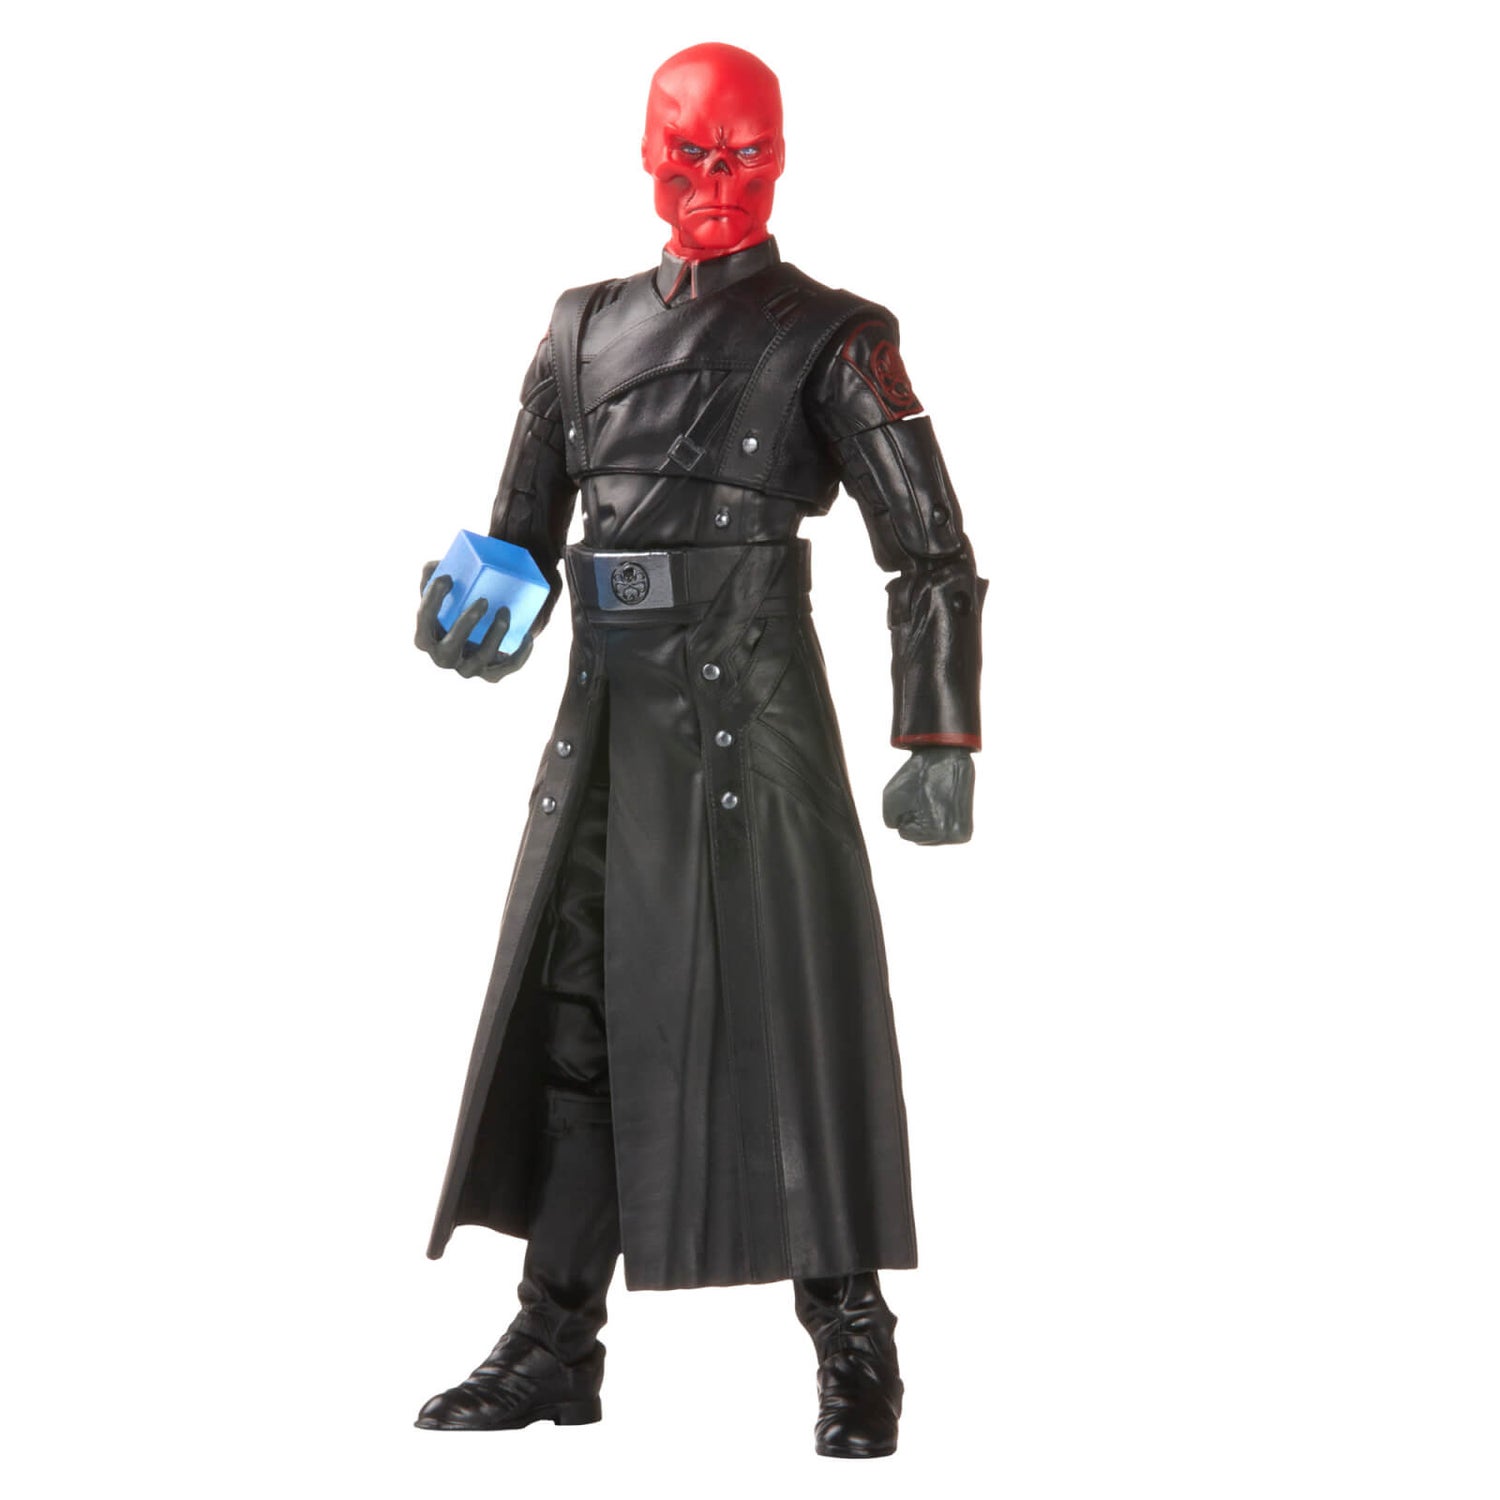 Hasbro Marvel Legends Series Red Skull 6 Inch Action Figure